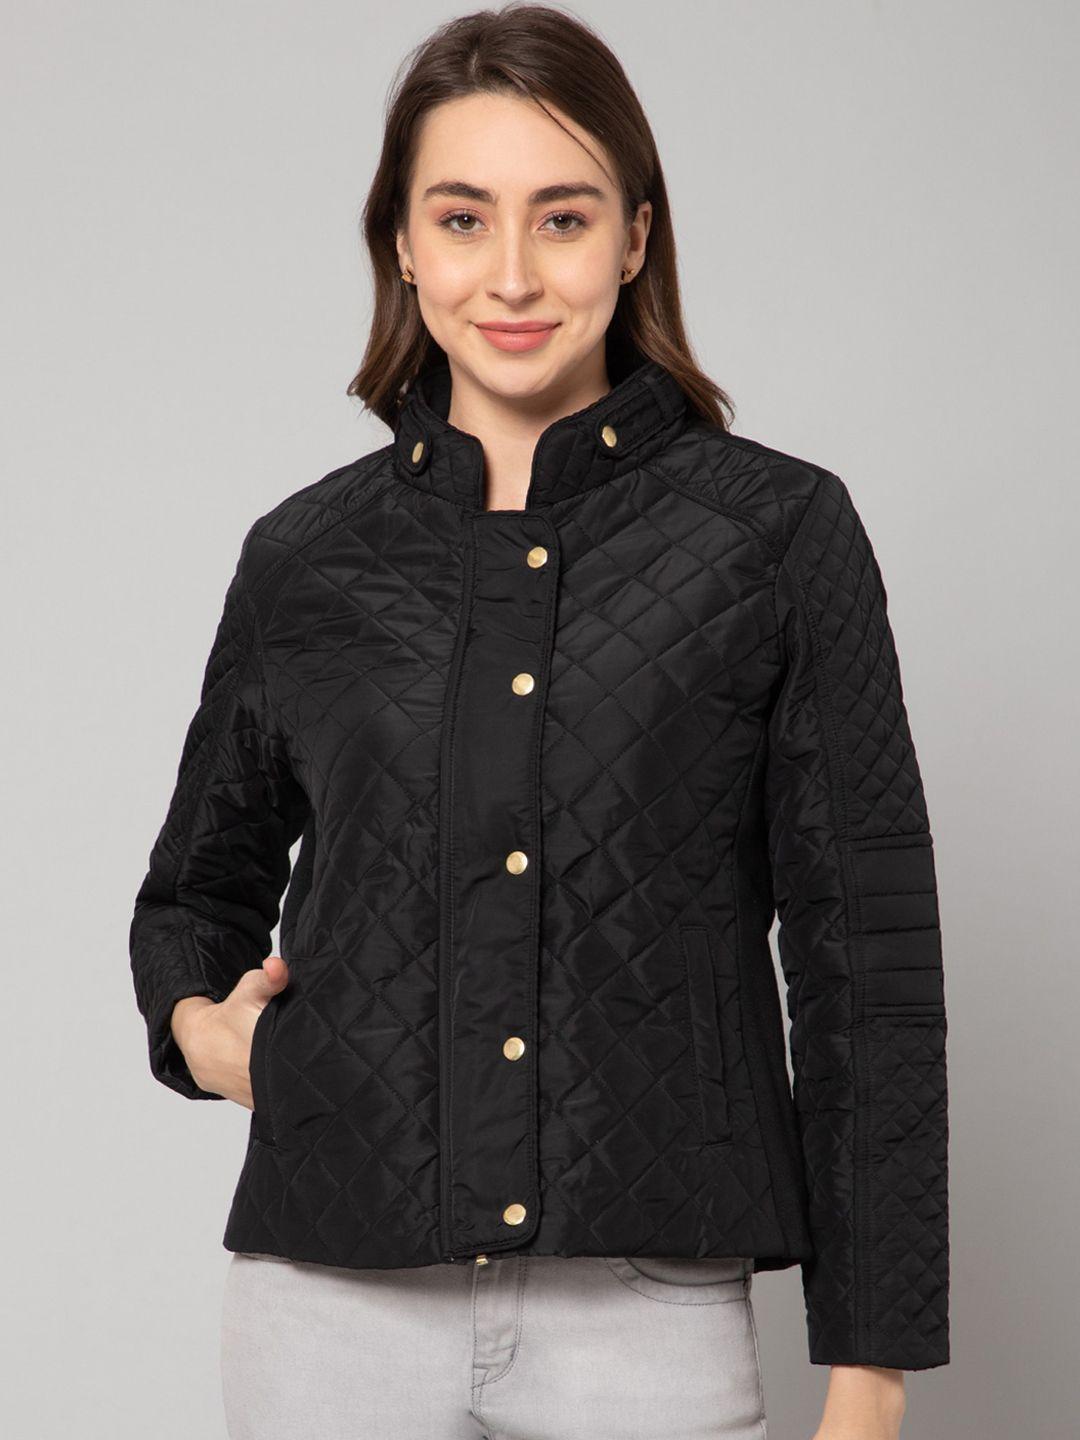 cantabil women lightweight quilted jacket